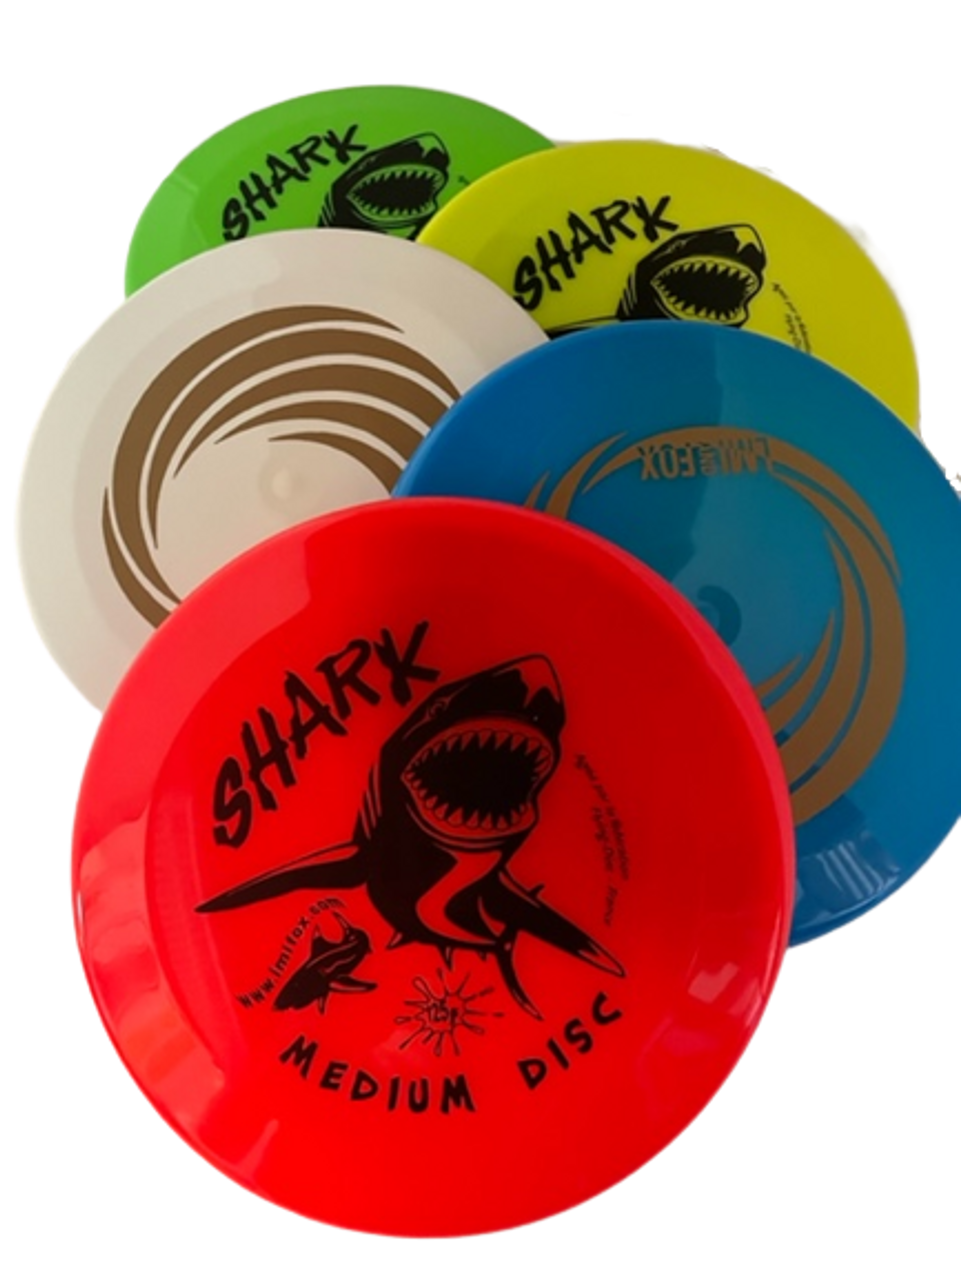 Frisbee "MEDIUM 125 g" Lmi &amp; Fox